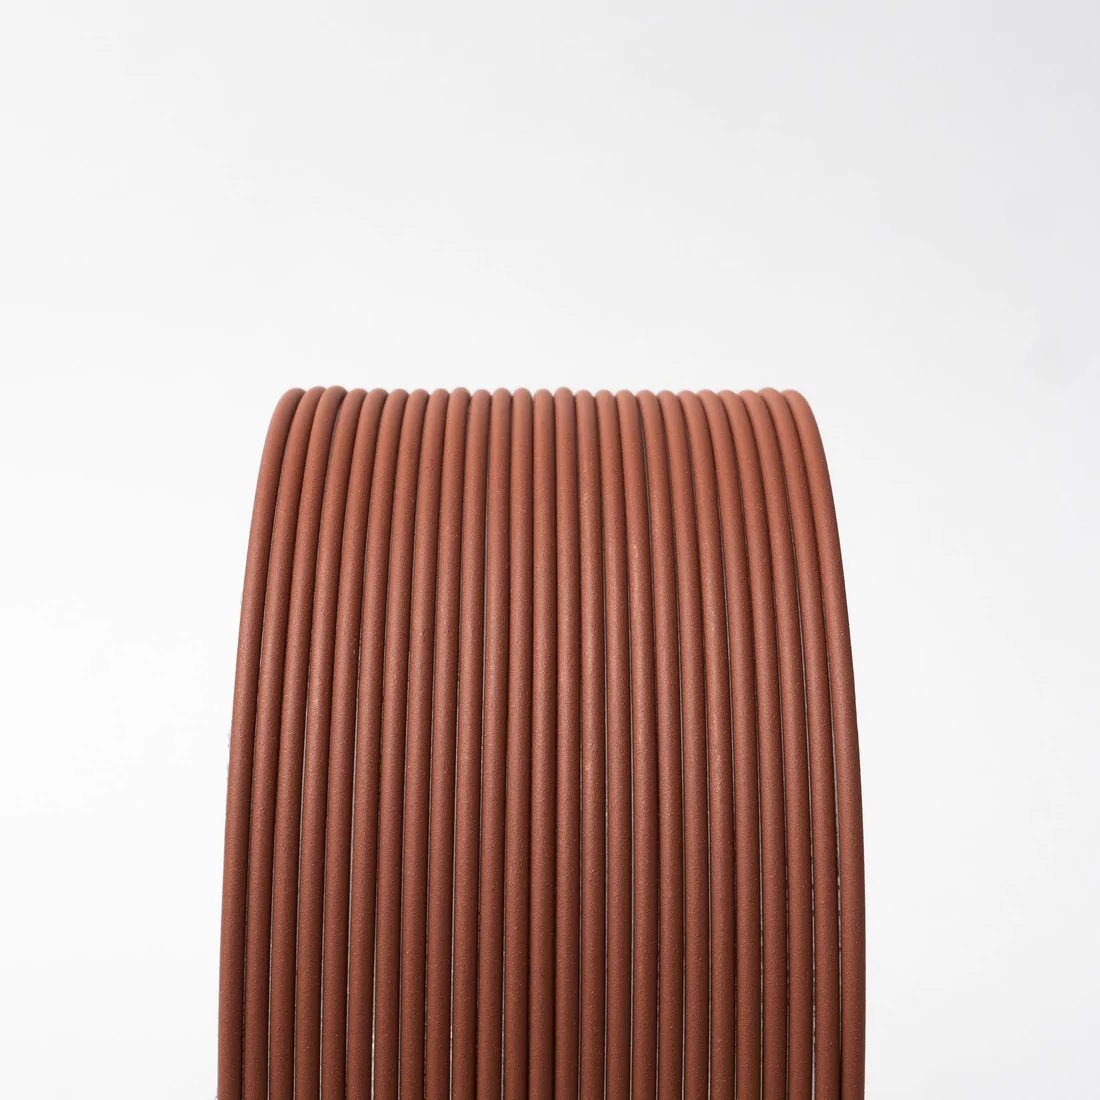 ProtoPasta Copper Composite HTPLA 1.75mm (Cardboard Spools - 500g) - West3D Printing - ProtoPasta